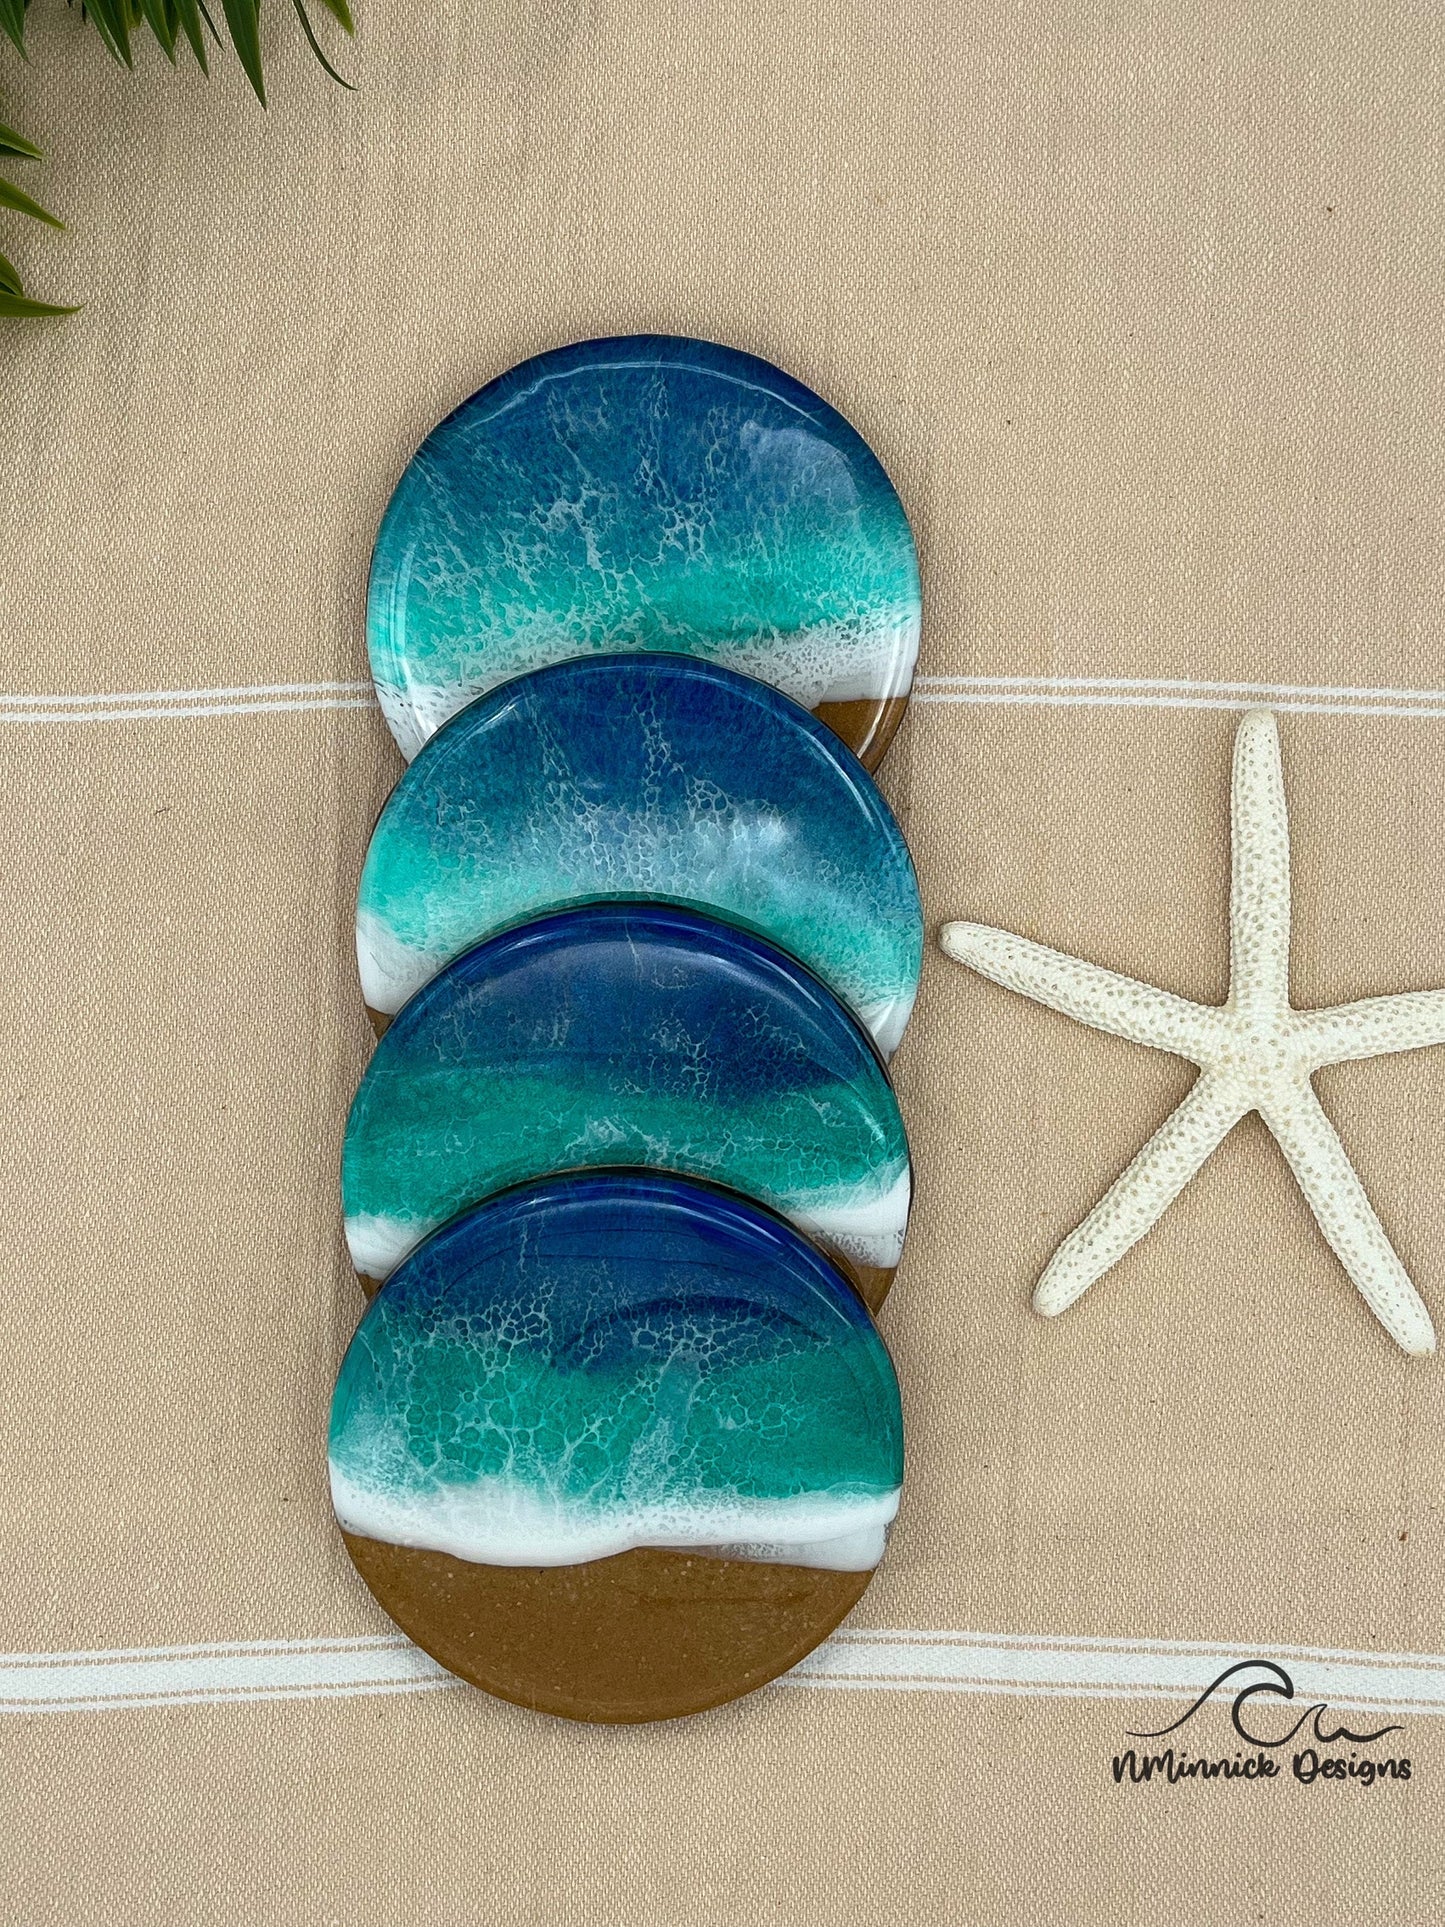 Blue and Green Beach Resin Coaster Set, Resin Coasters, Ocean Resin Coasters, Drink Coasters, Coaster Set